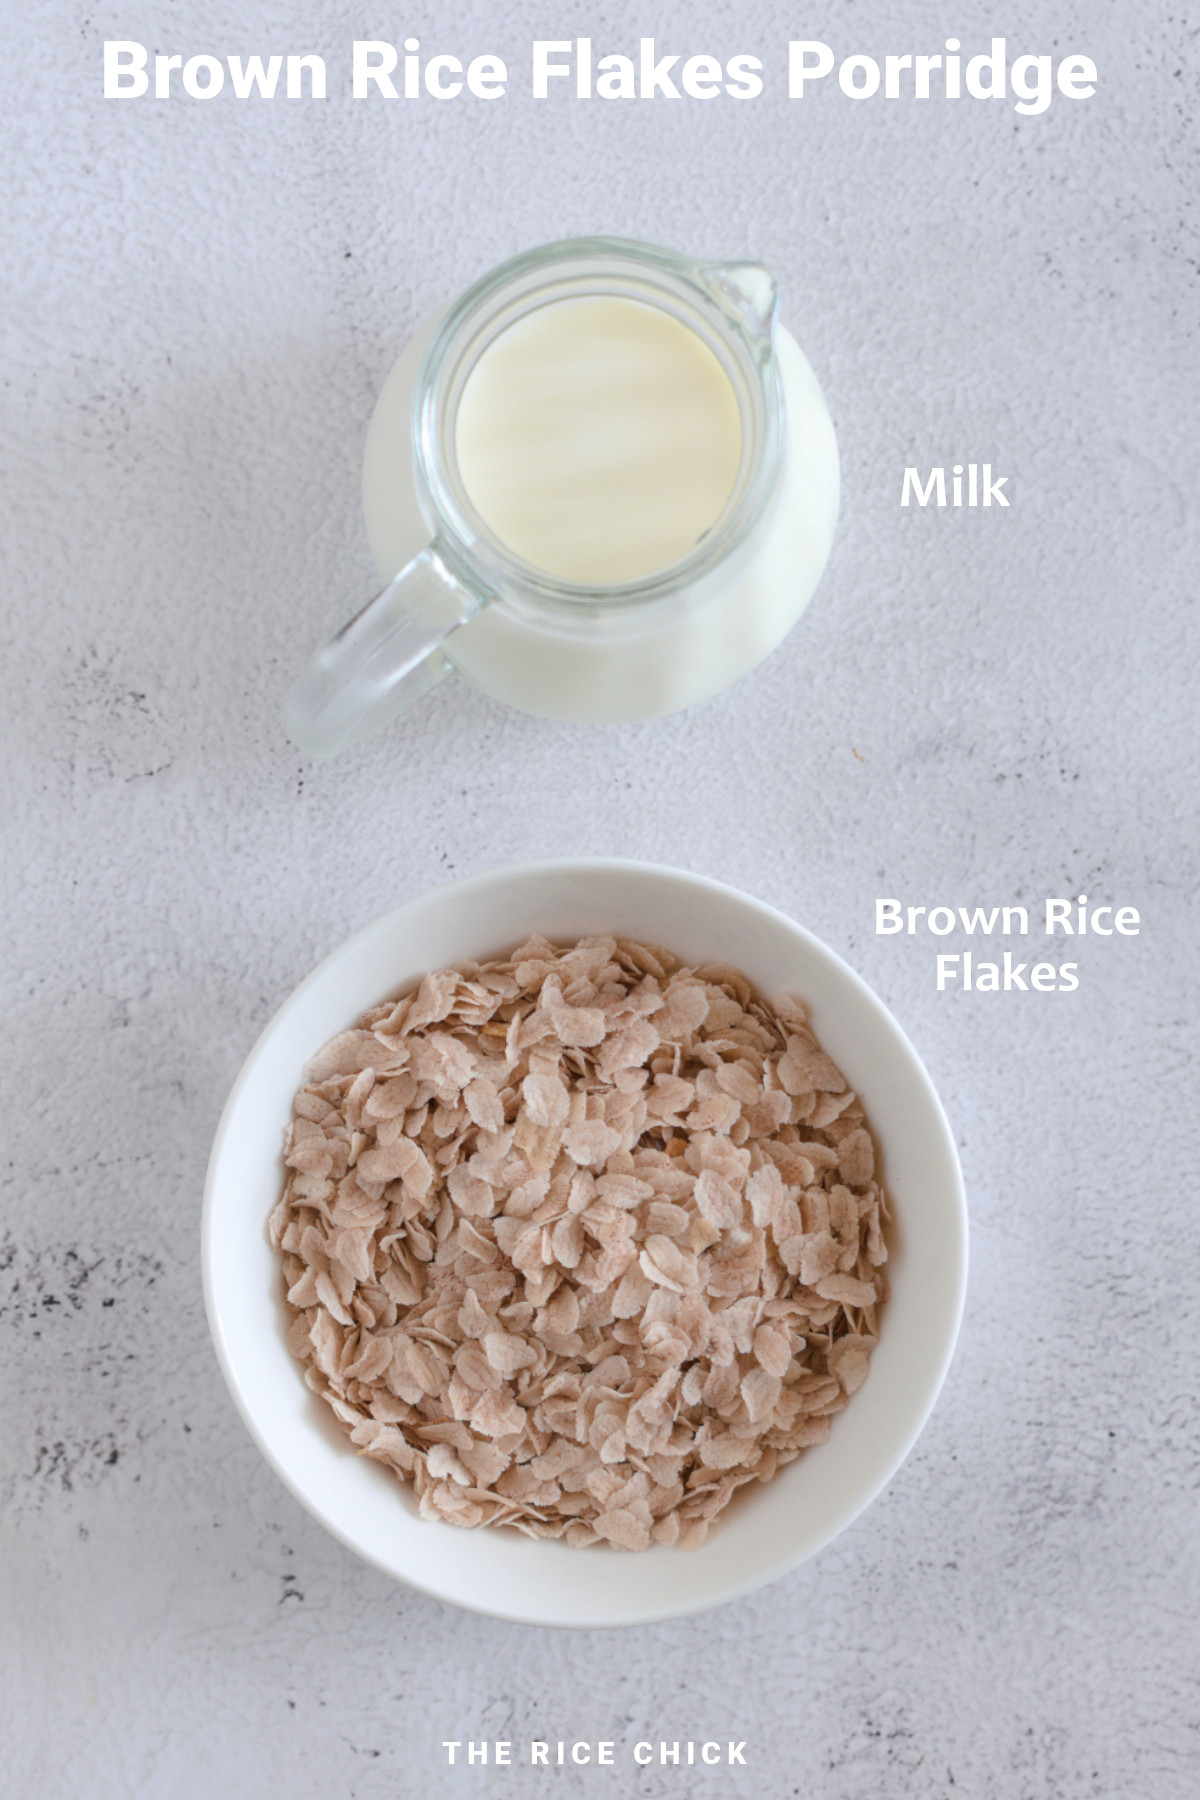 Brown rice flakes porridge ingredients.